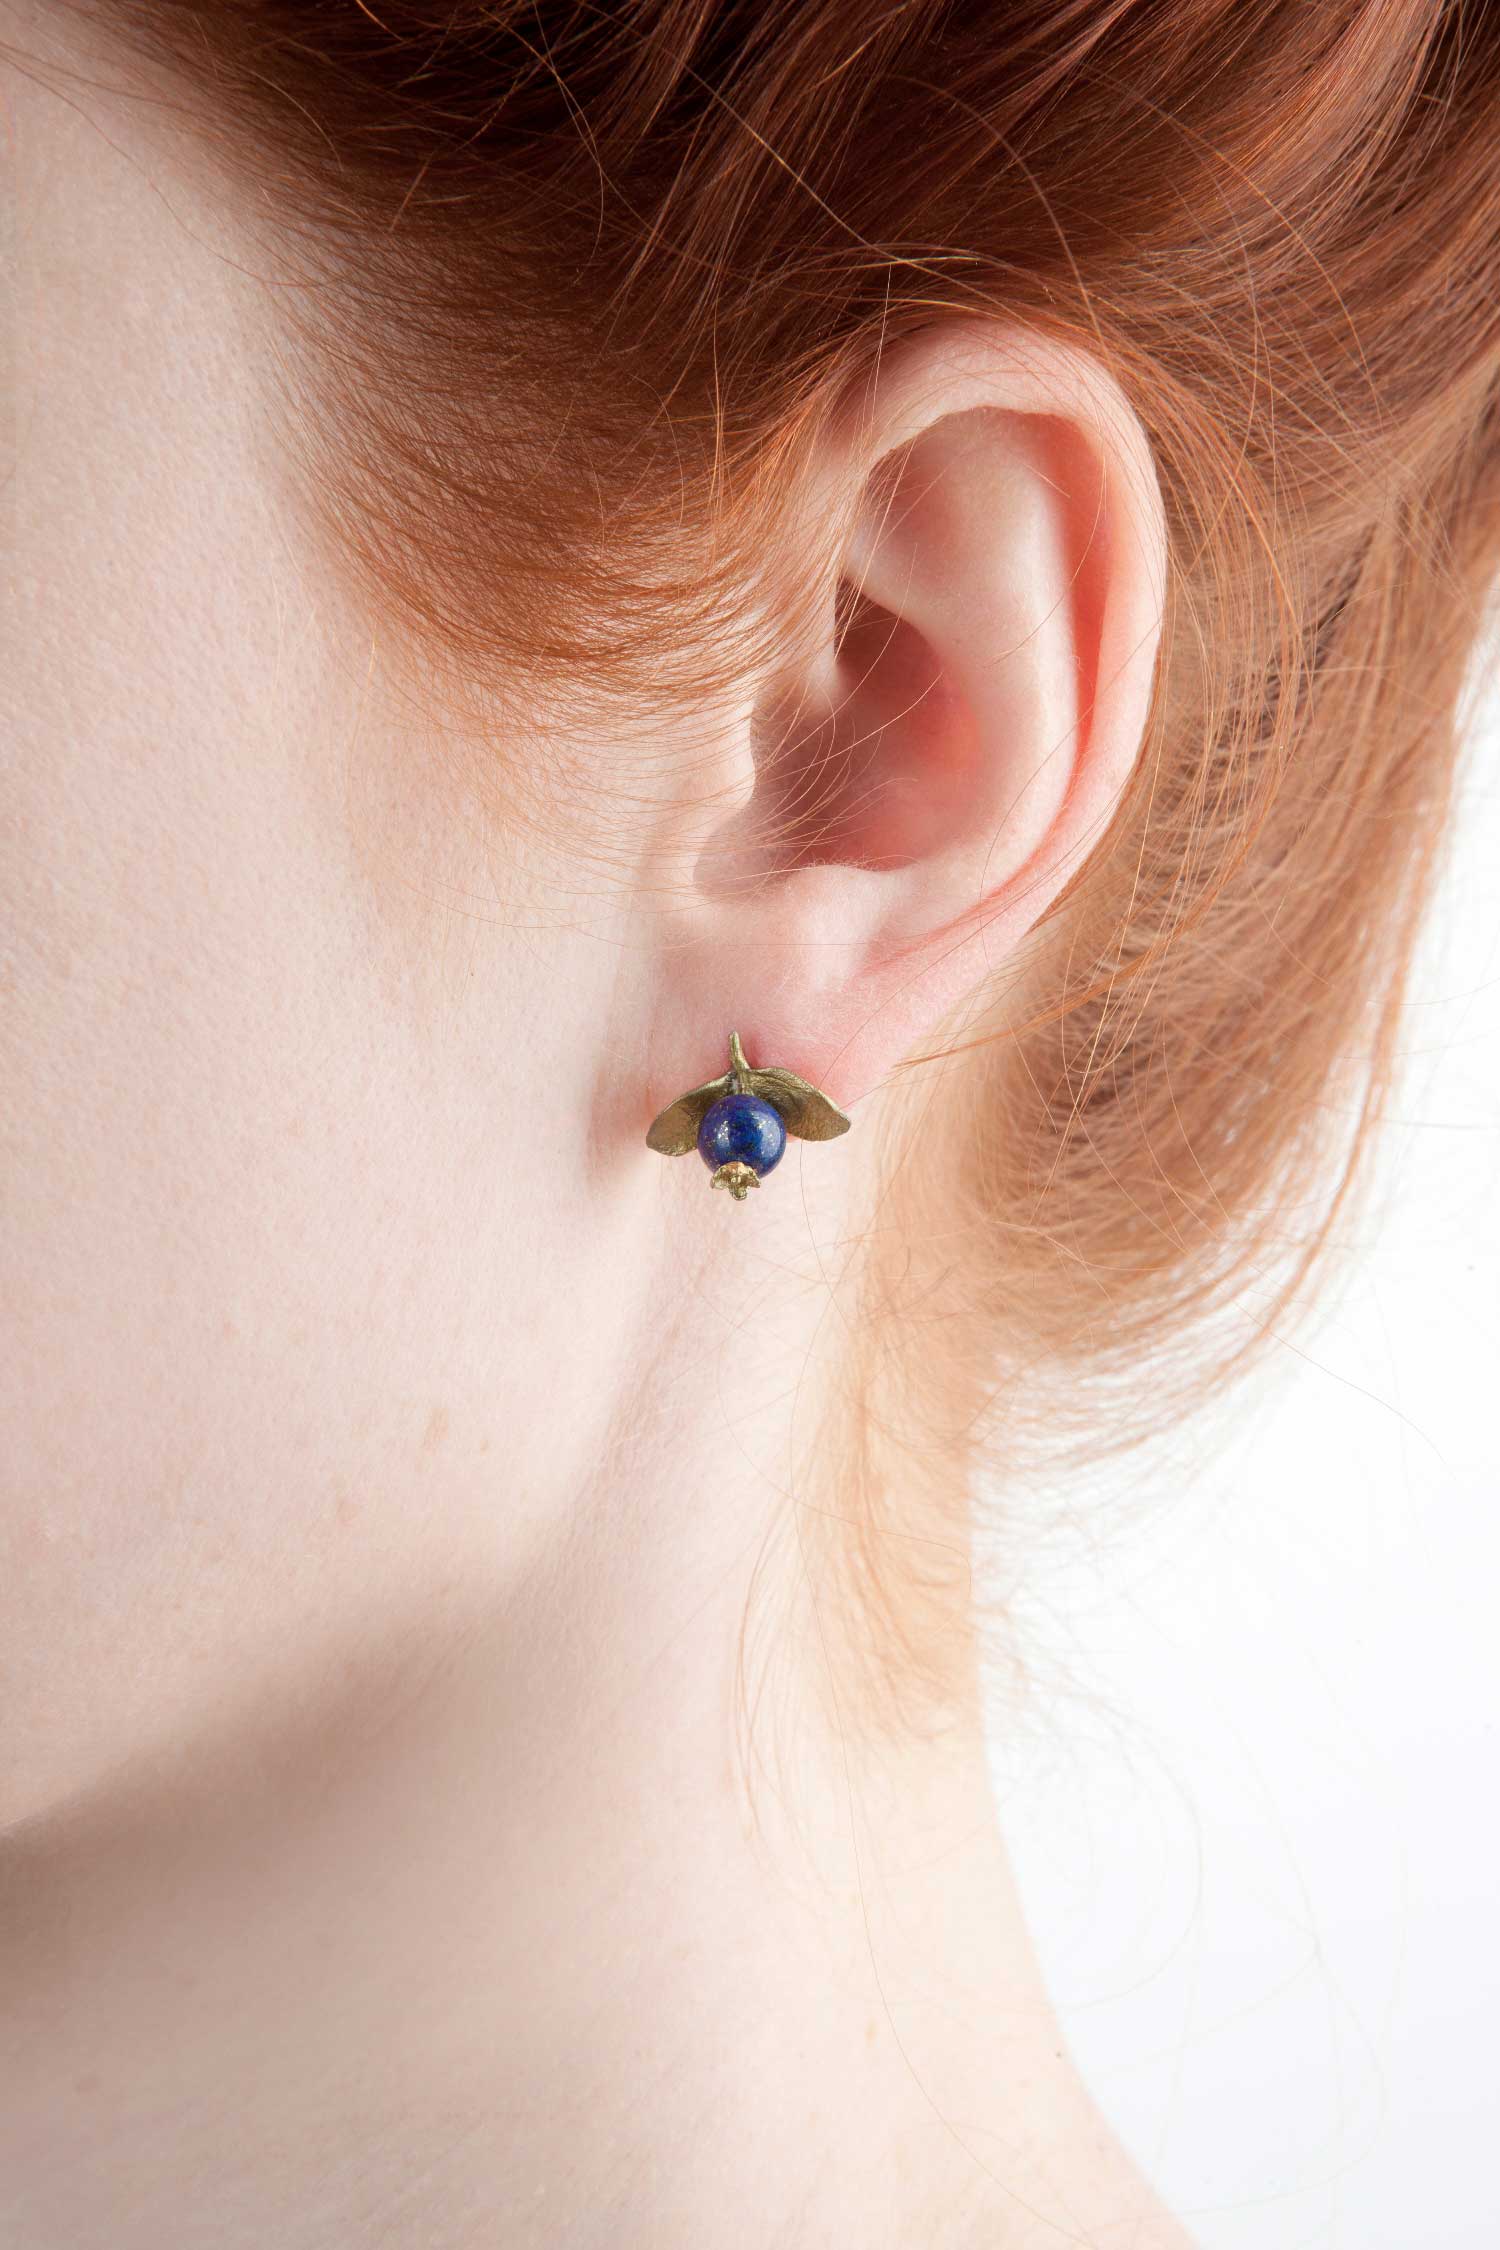 Blueberry Earrings - Post